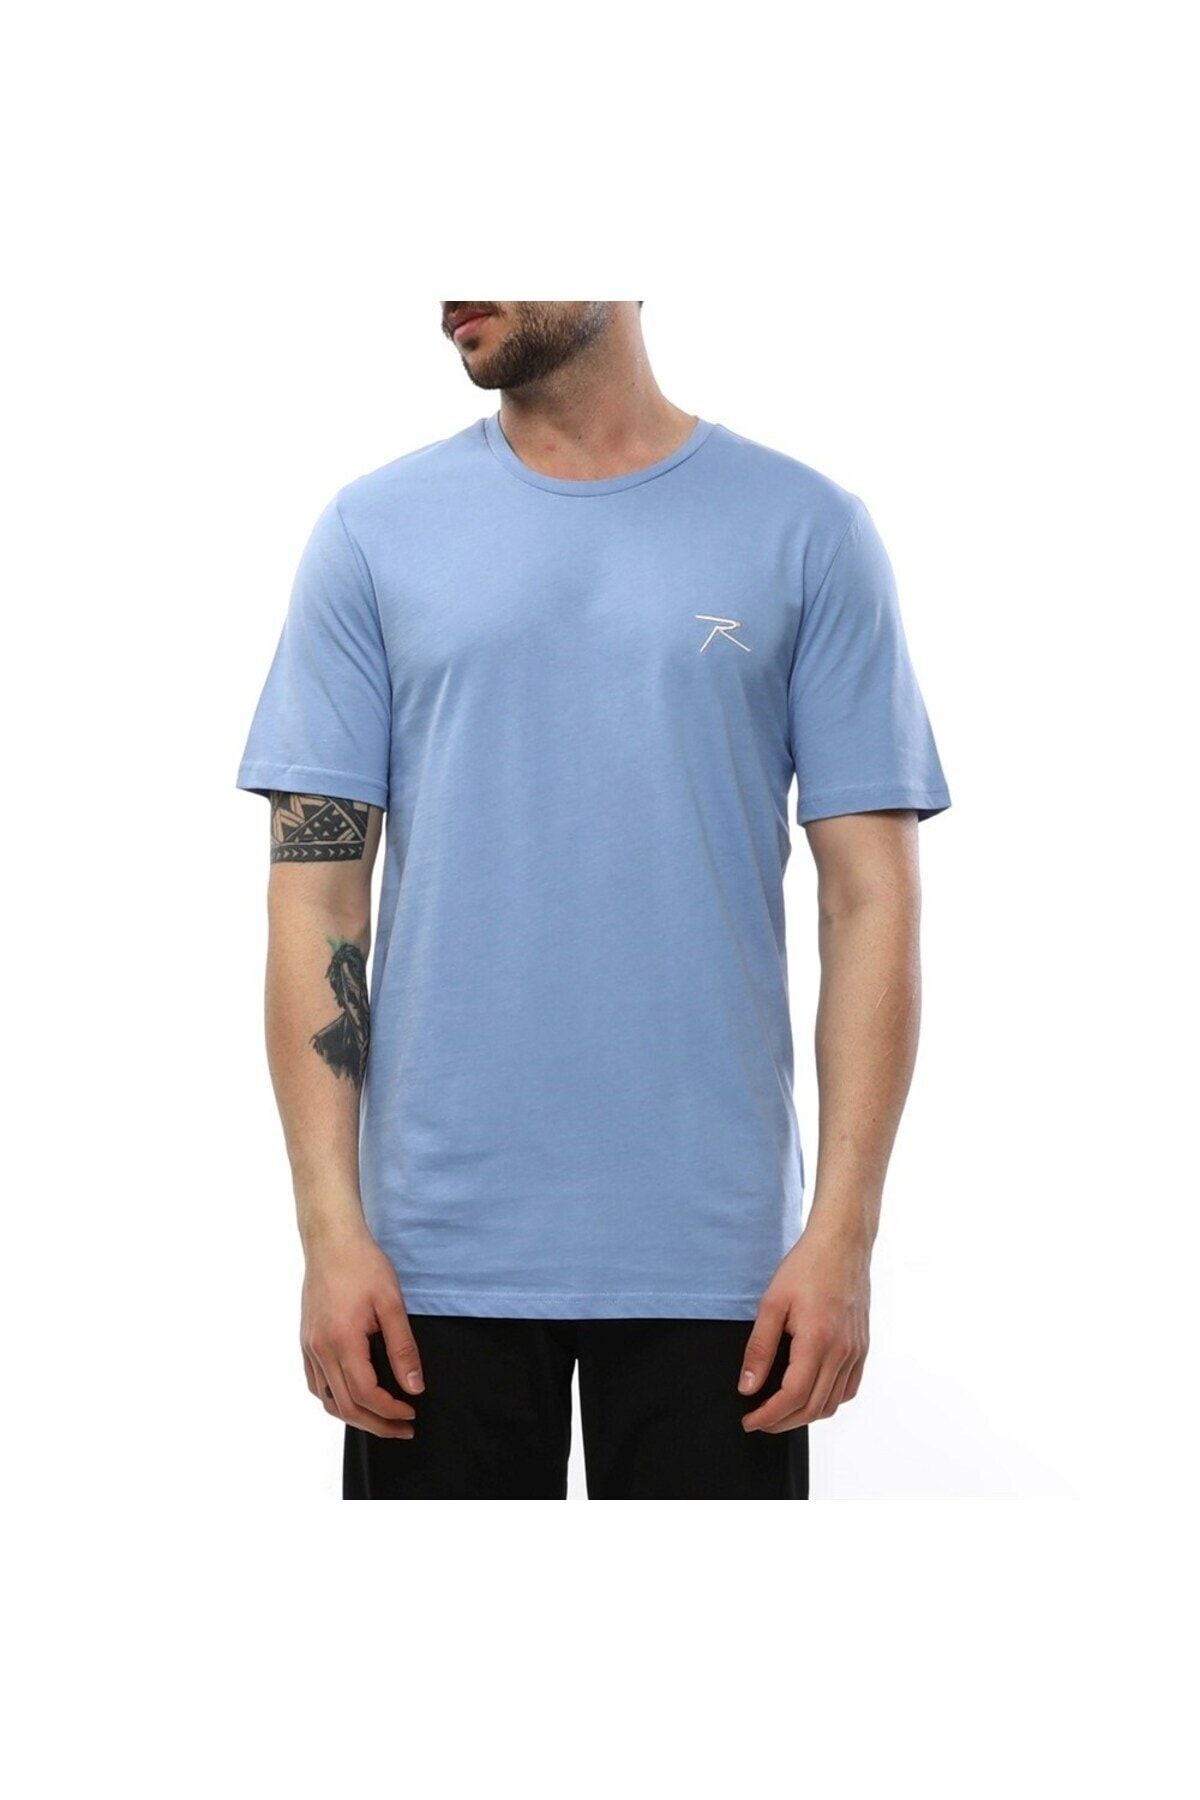 raru AGNITIO Erkek Pamuklu Mavi Günlük T-shirt